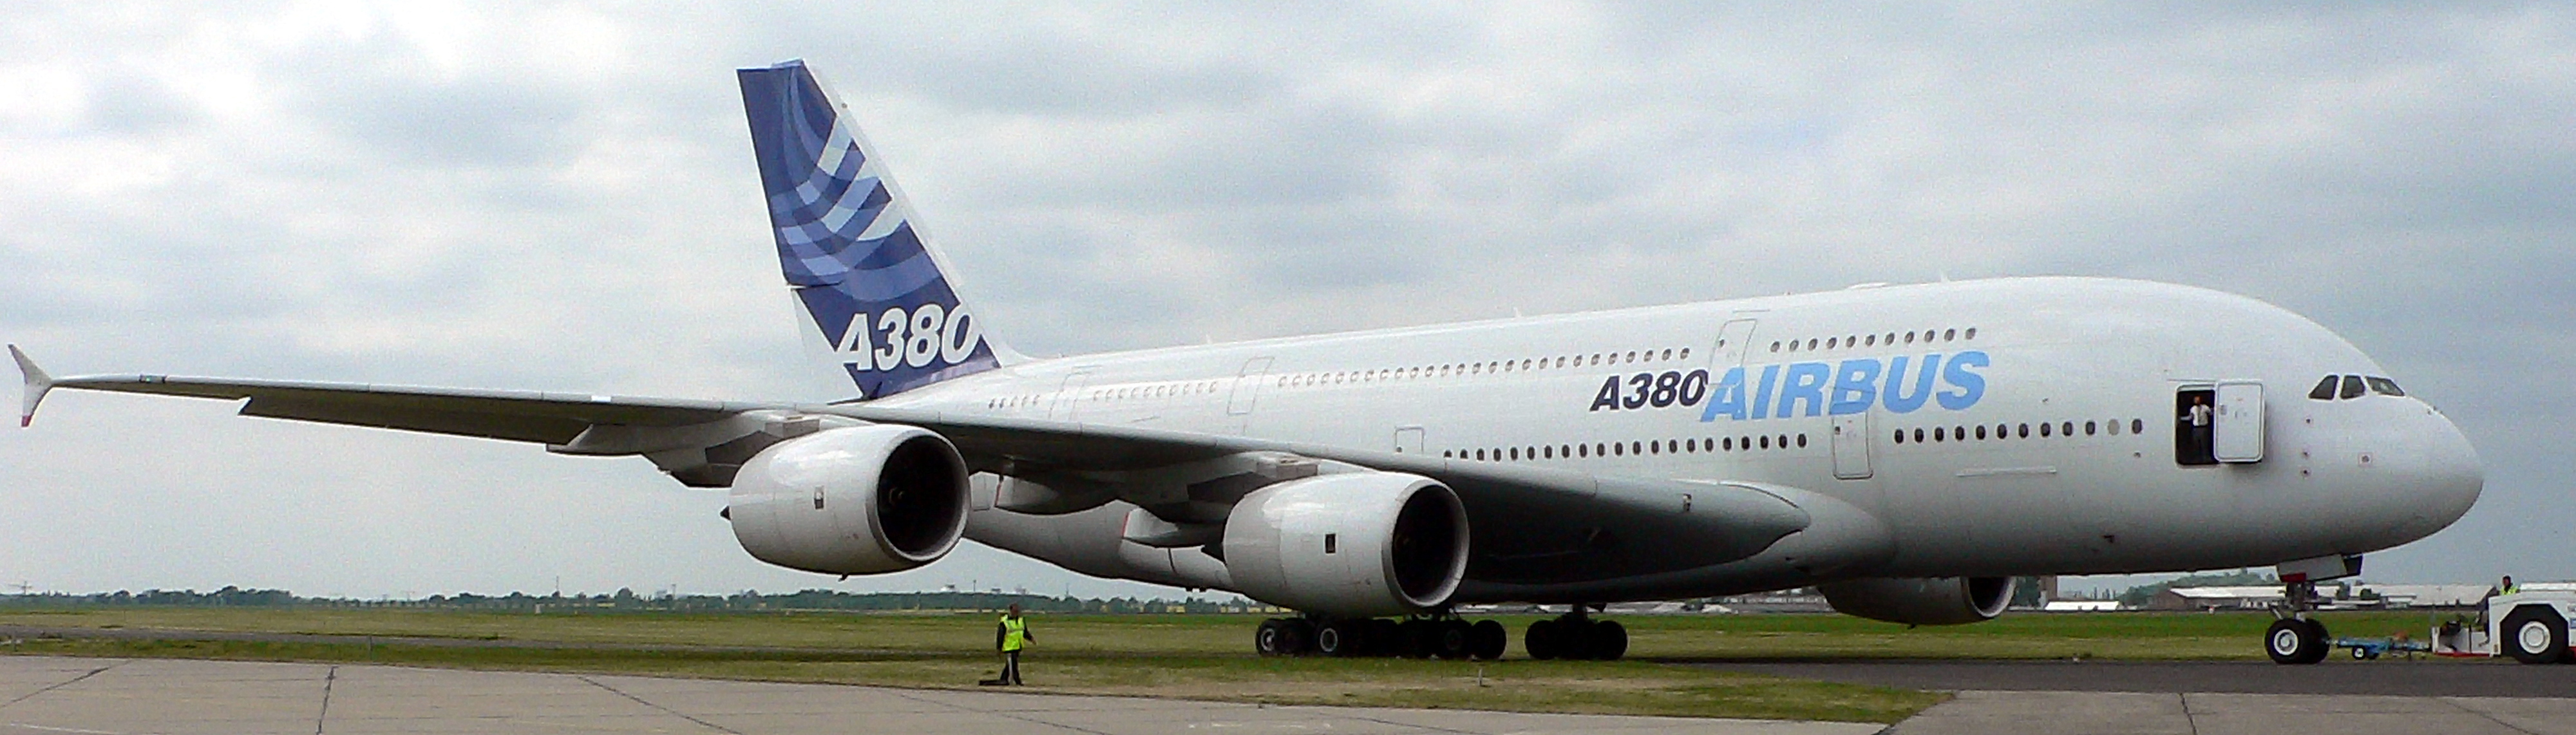 Airbus A380 #1